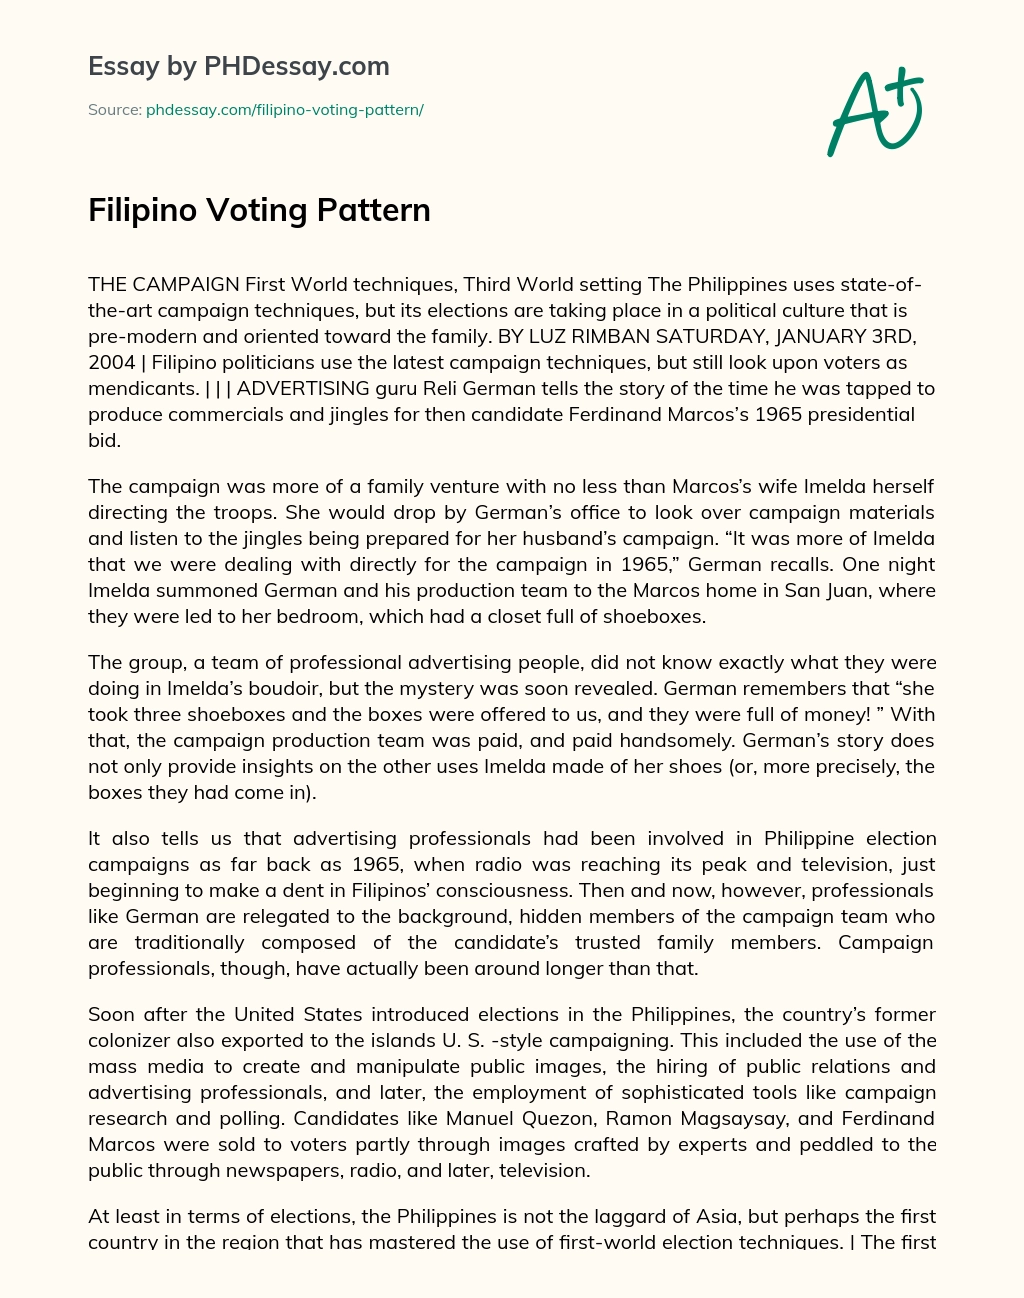 Filipino Voting Pattern essay